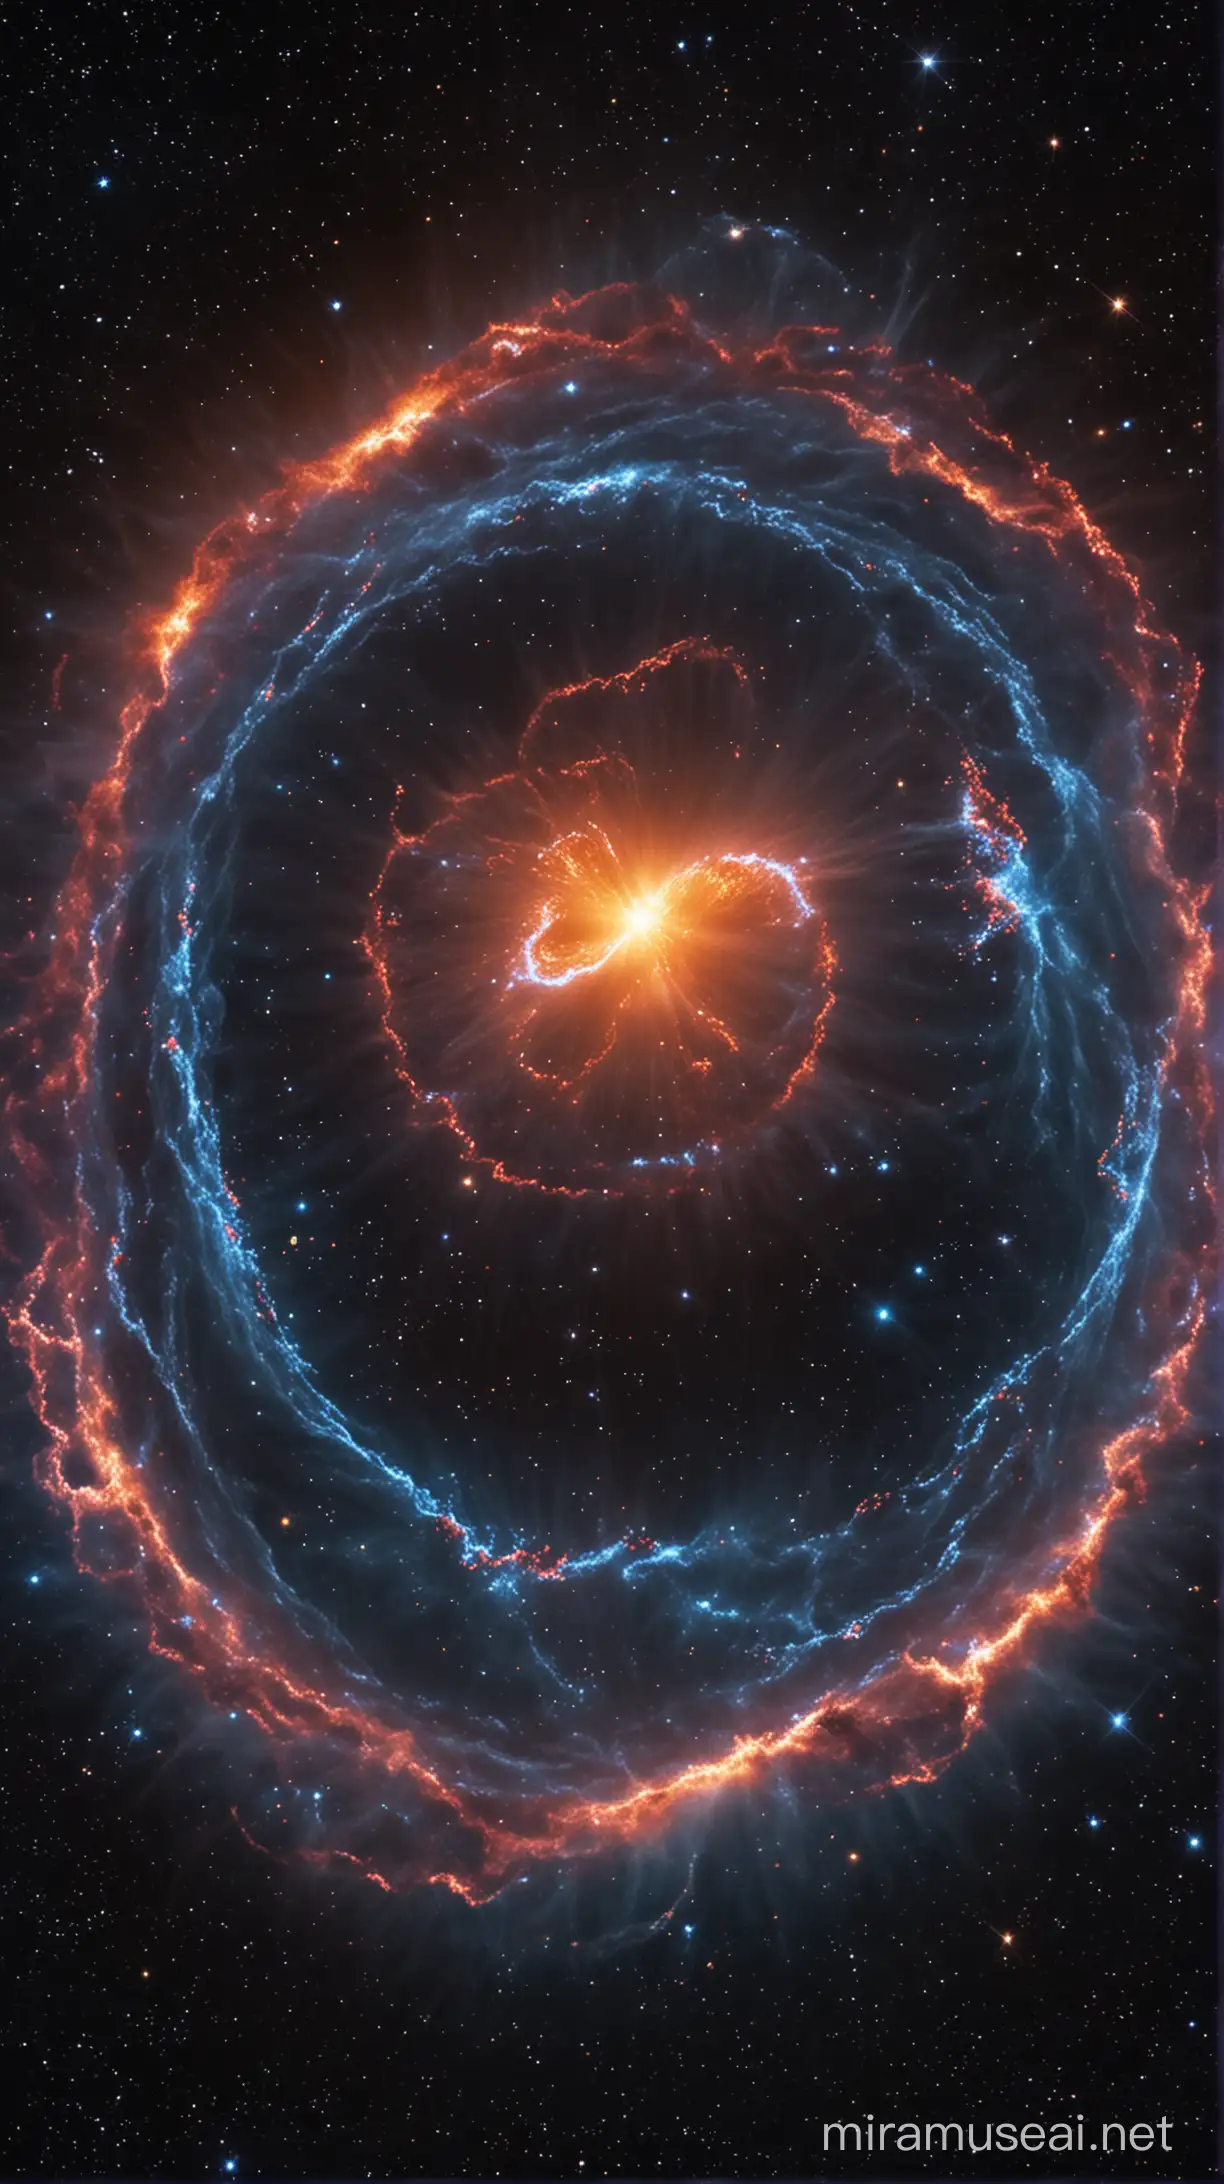 Stellar Explosion Cosmic Wonders of the Universe